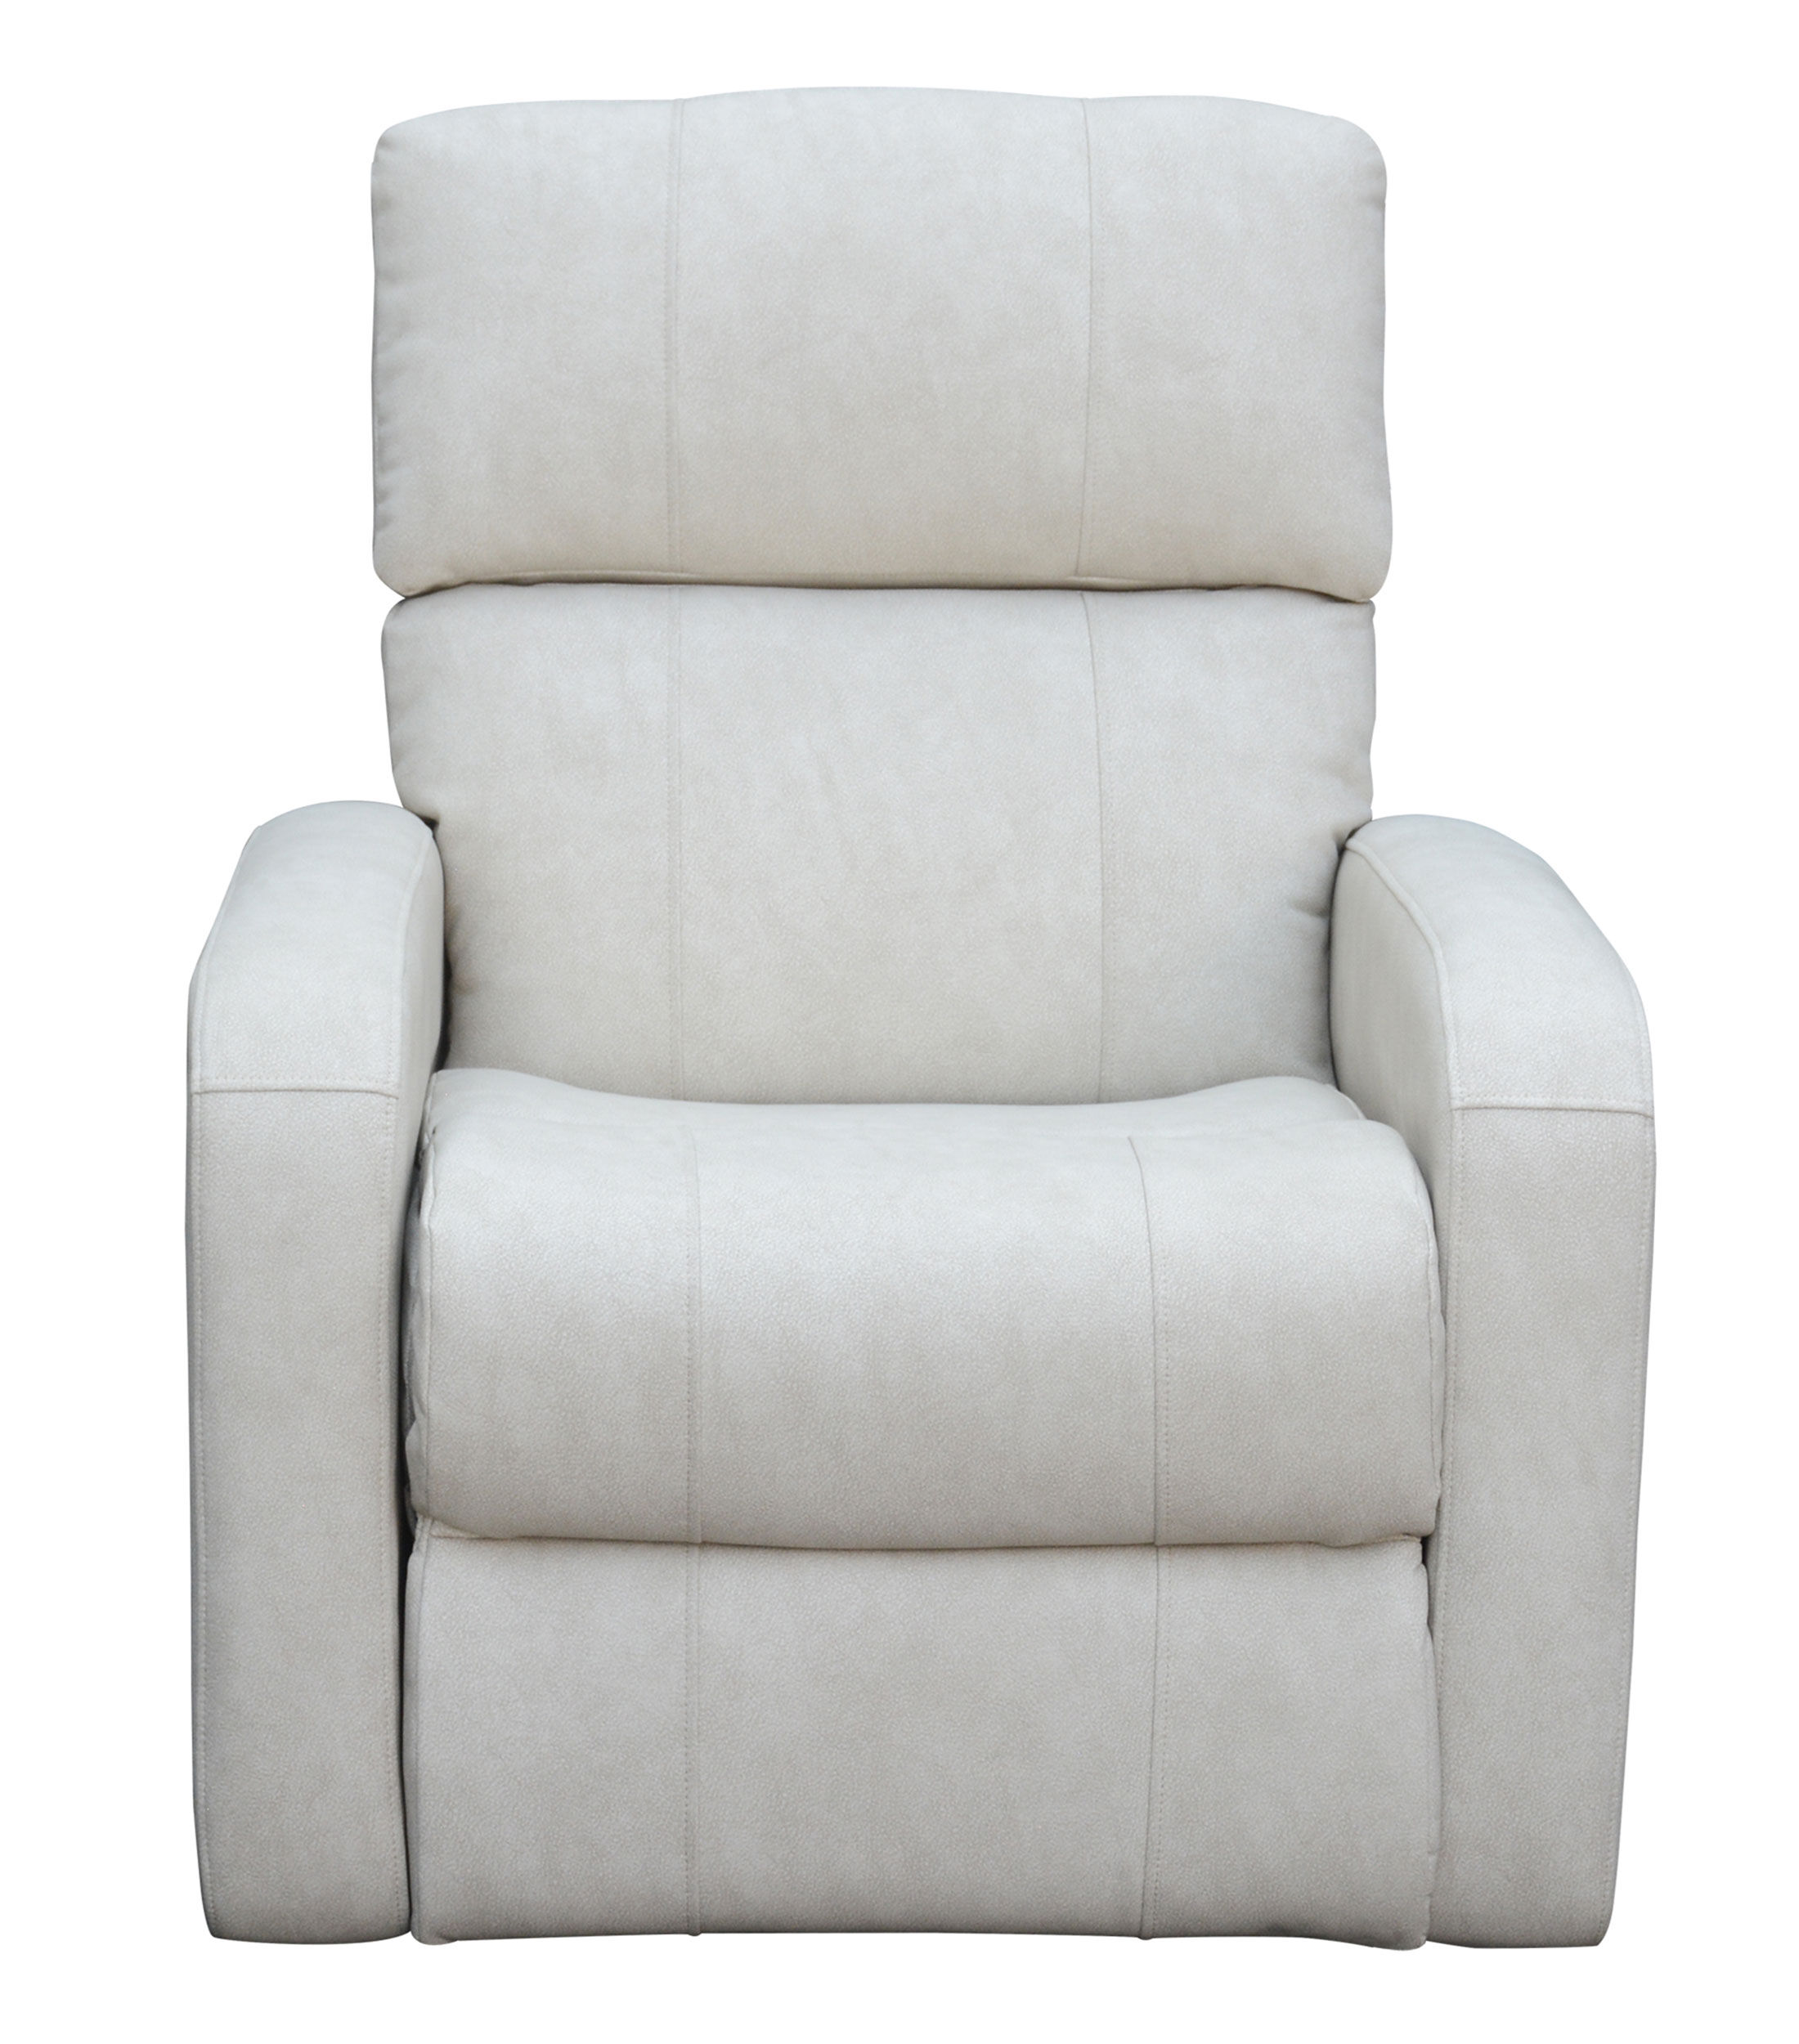 Maison Exclusive - Sillón orejero reclinable eléctrico tela blanco crema